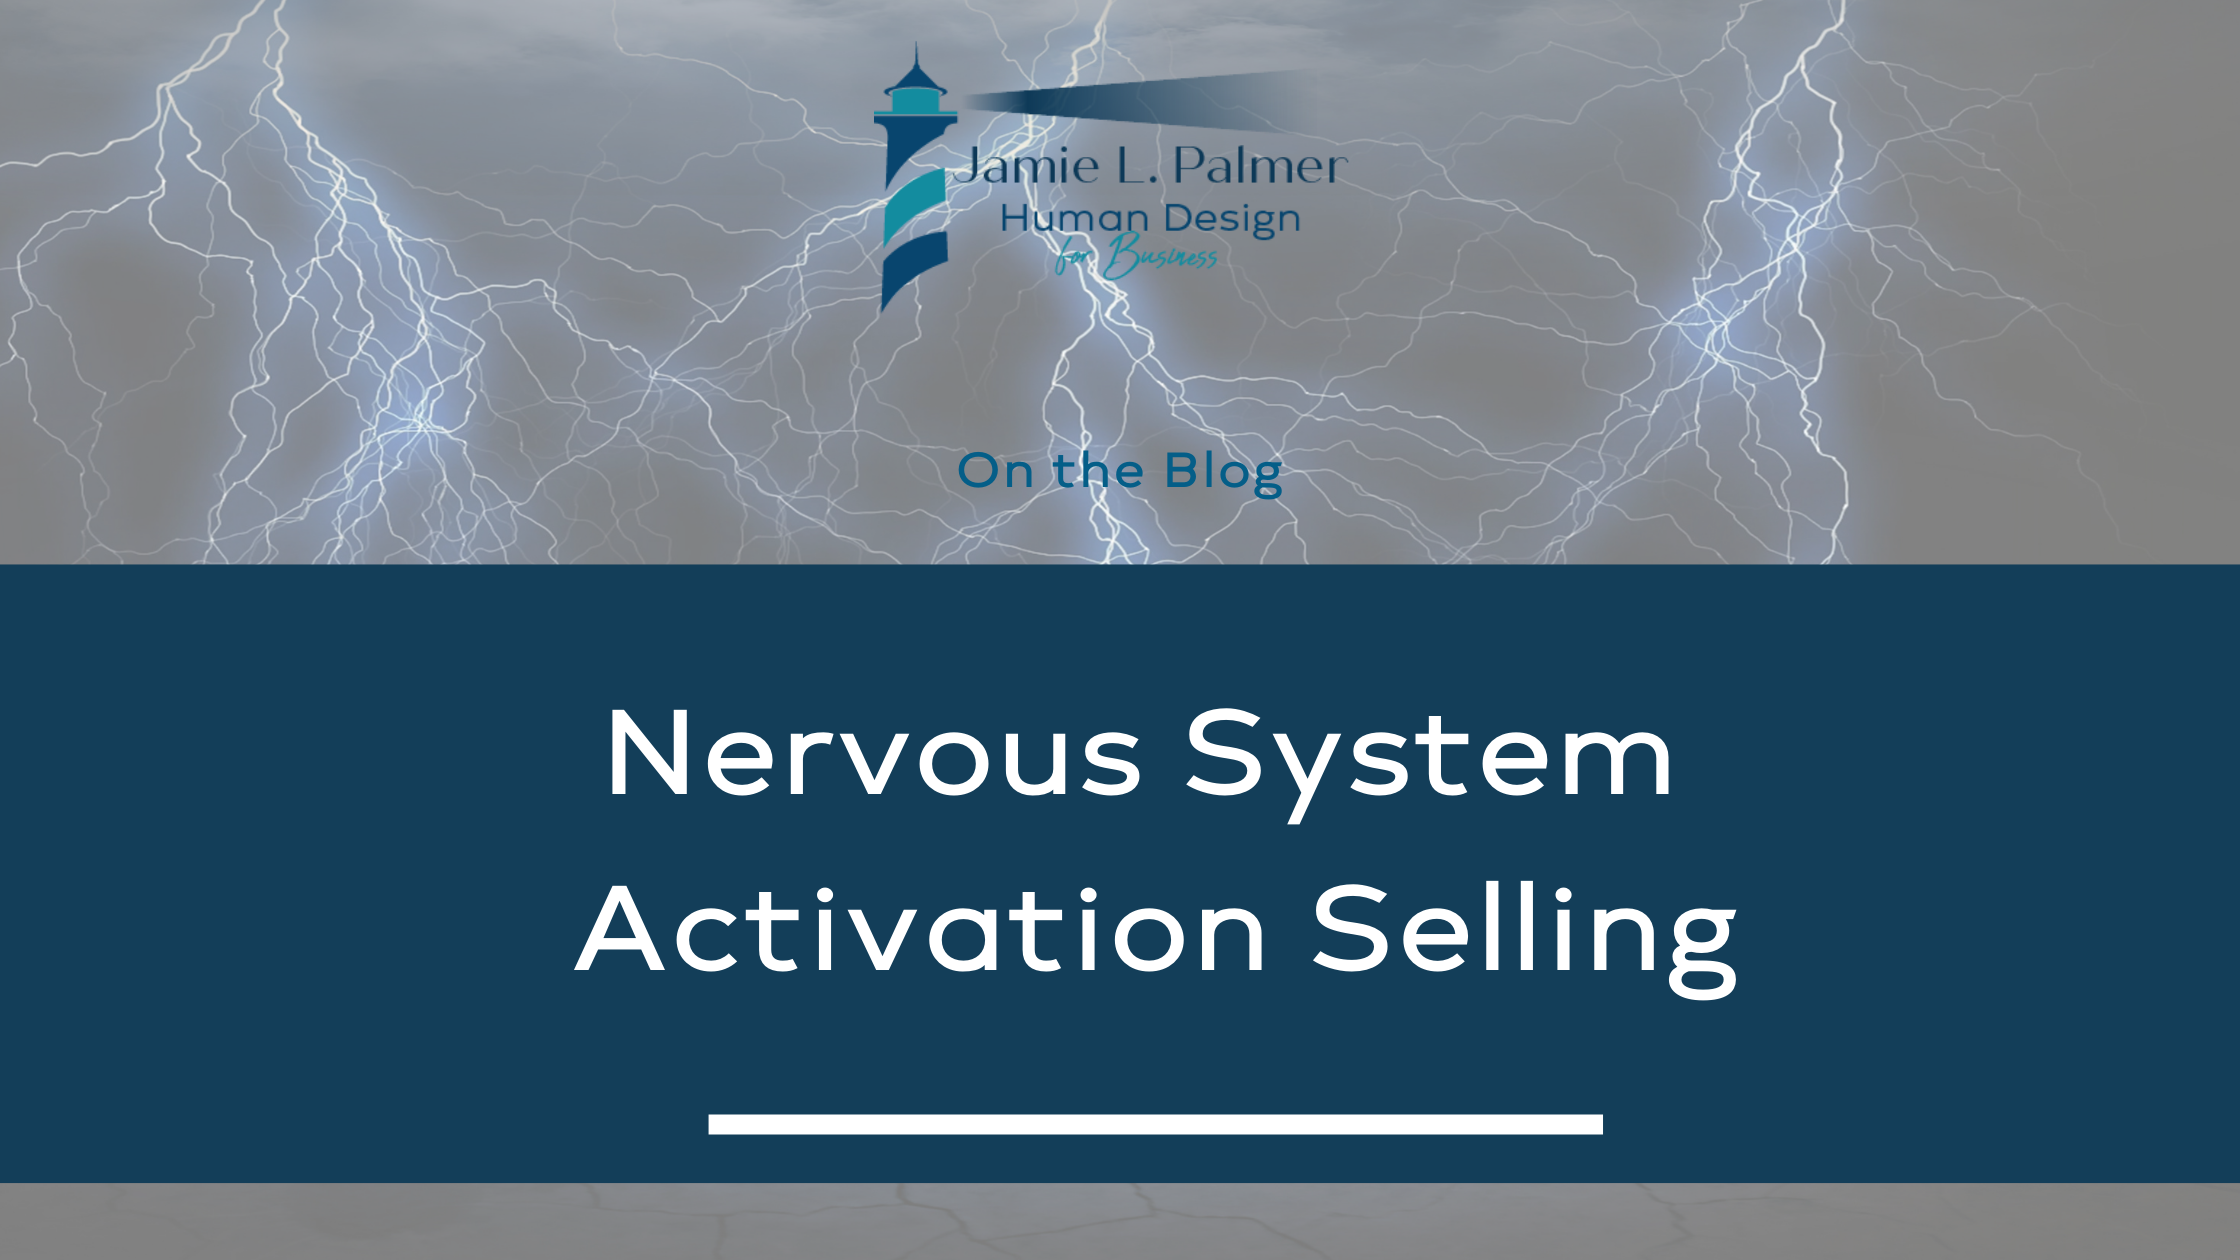 Nervous System Activation - Not-self mad men bro marketing